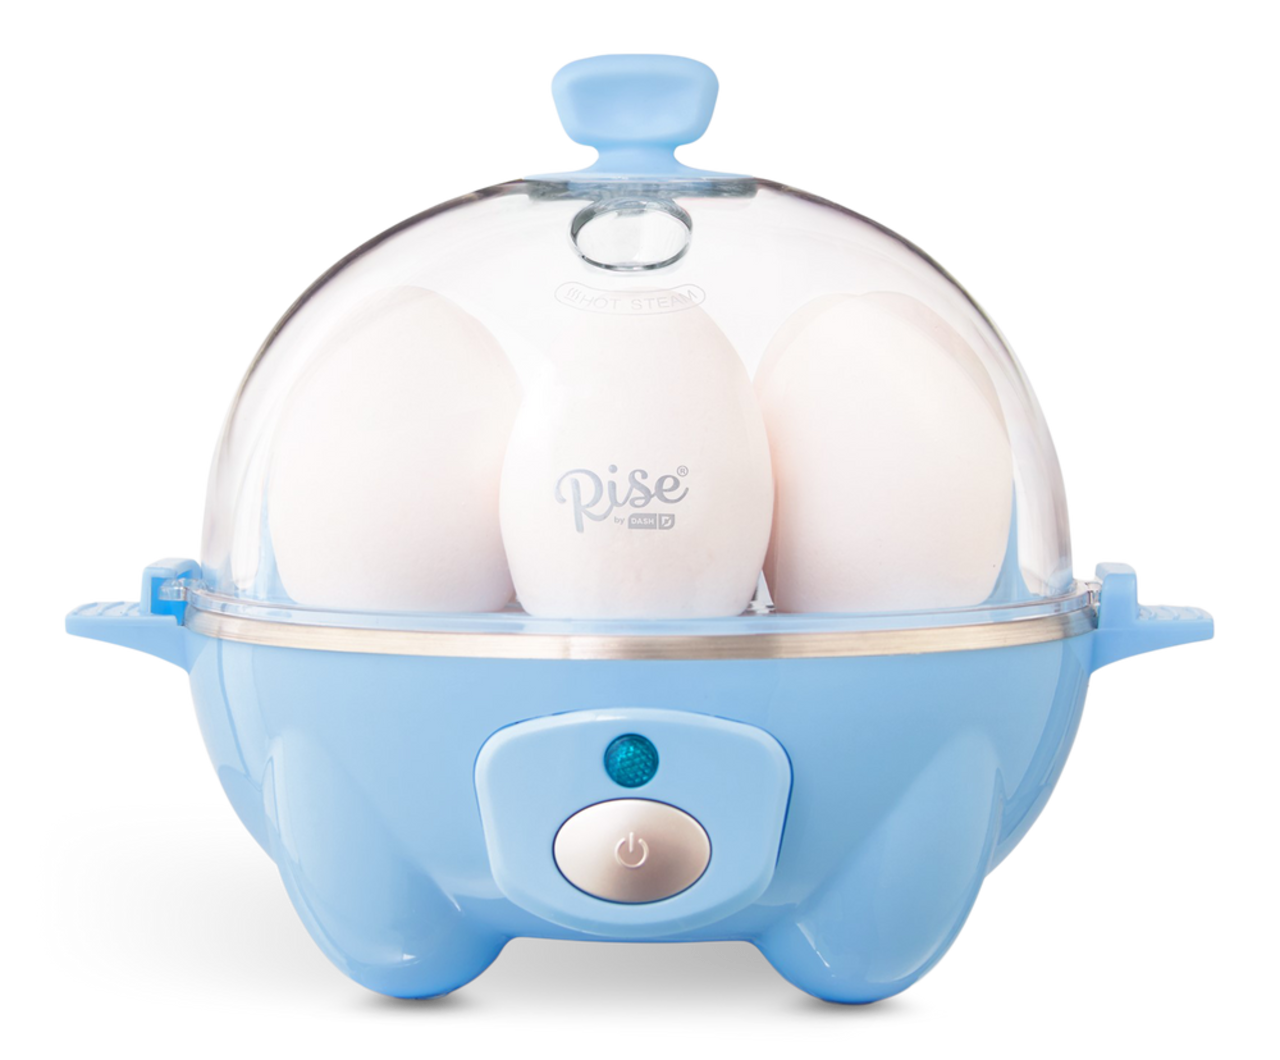 Mini cuiseur à oeufs compact Rise by Dash, bleu